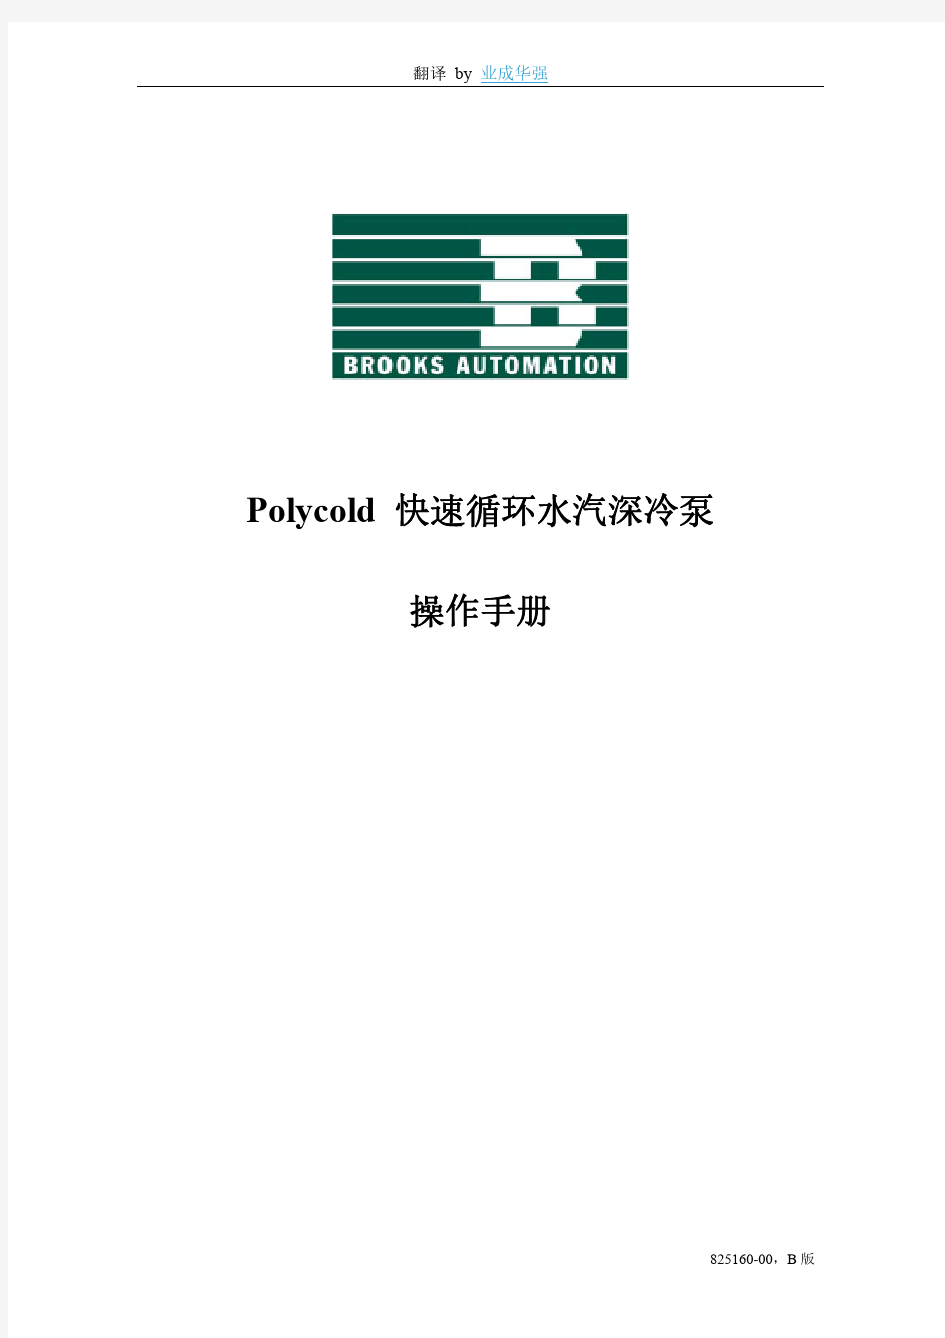 Polycold 操作手册中文版825160-00